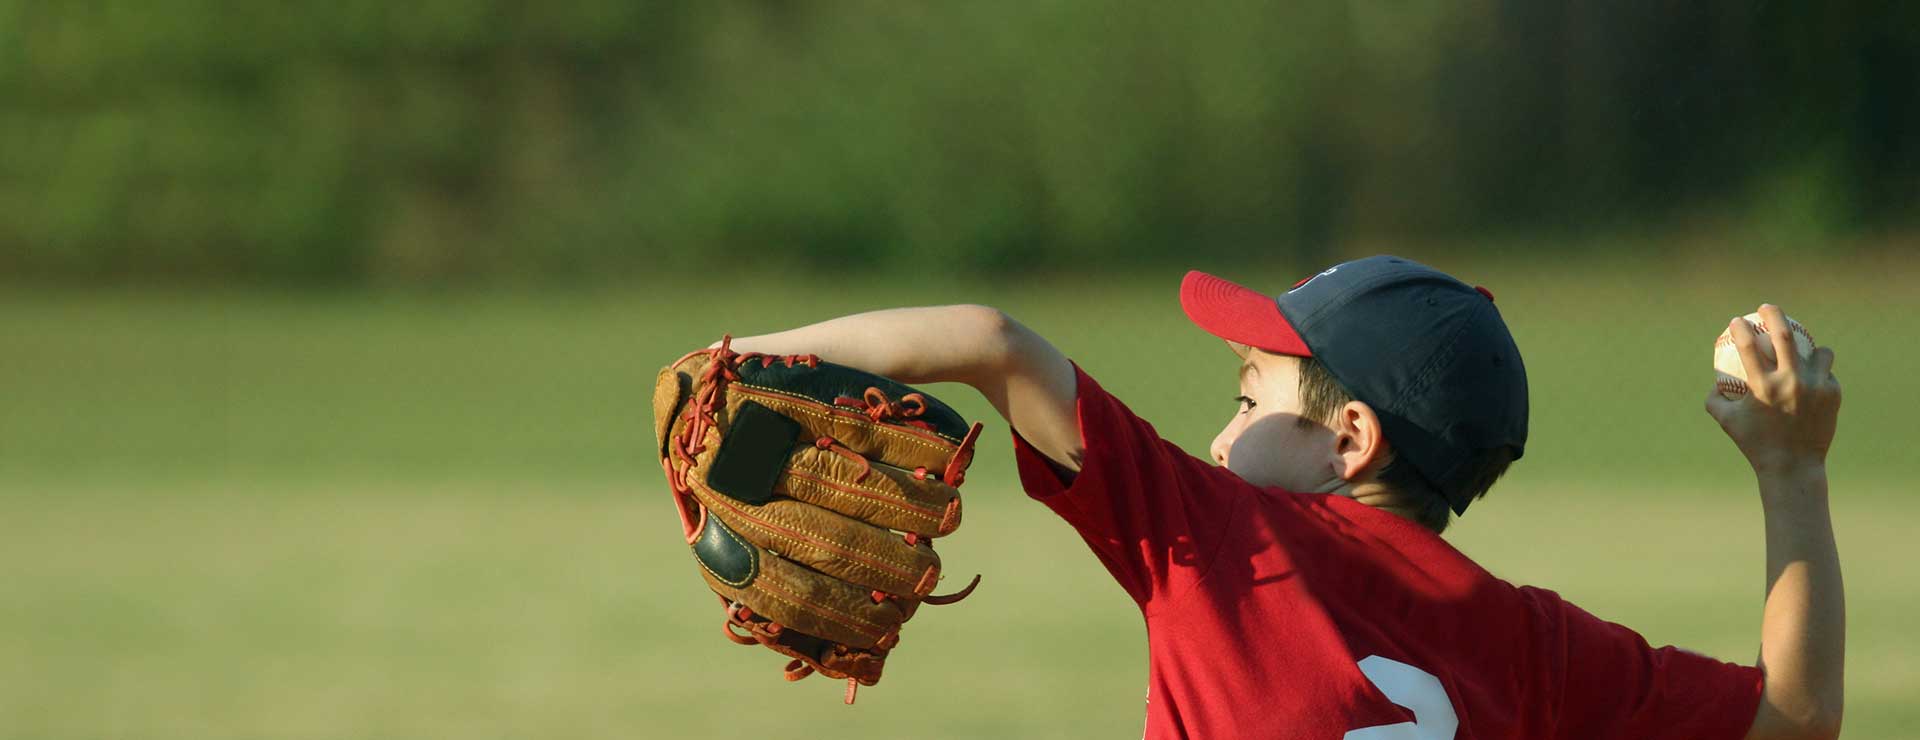 Elbow Problems In Little League Baseball Players Johns Hopkins Medicine